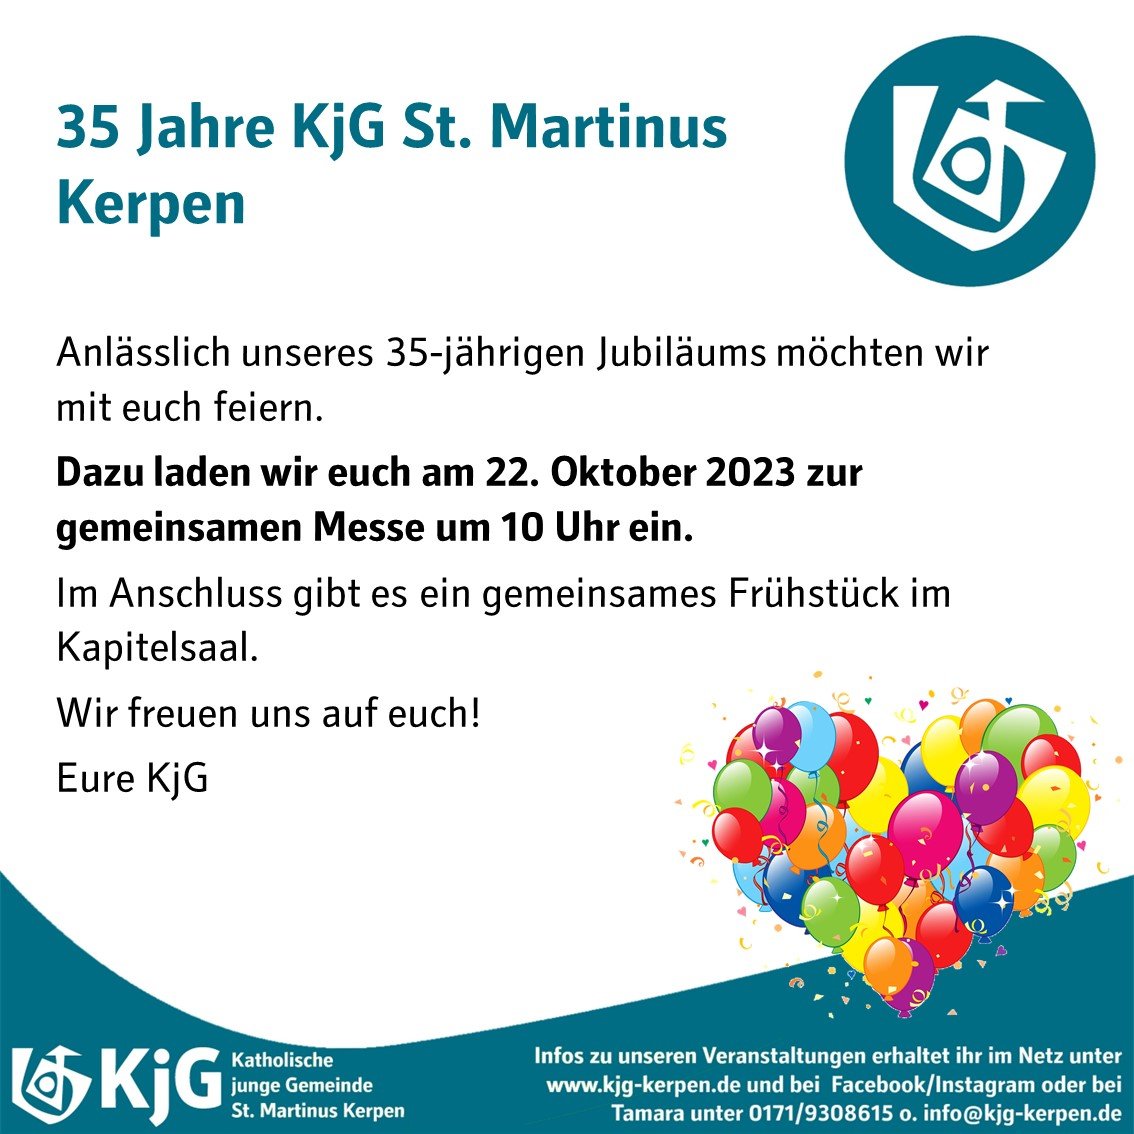 35 Jahre KjG St. Martinus Kerpen (c) KjG Kerpen_TD